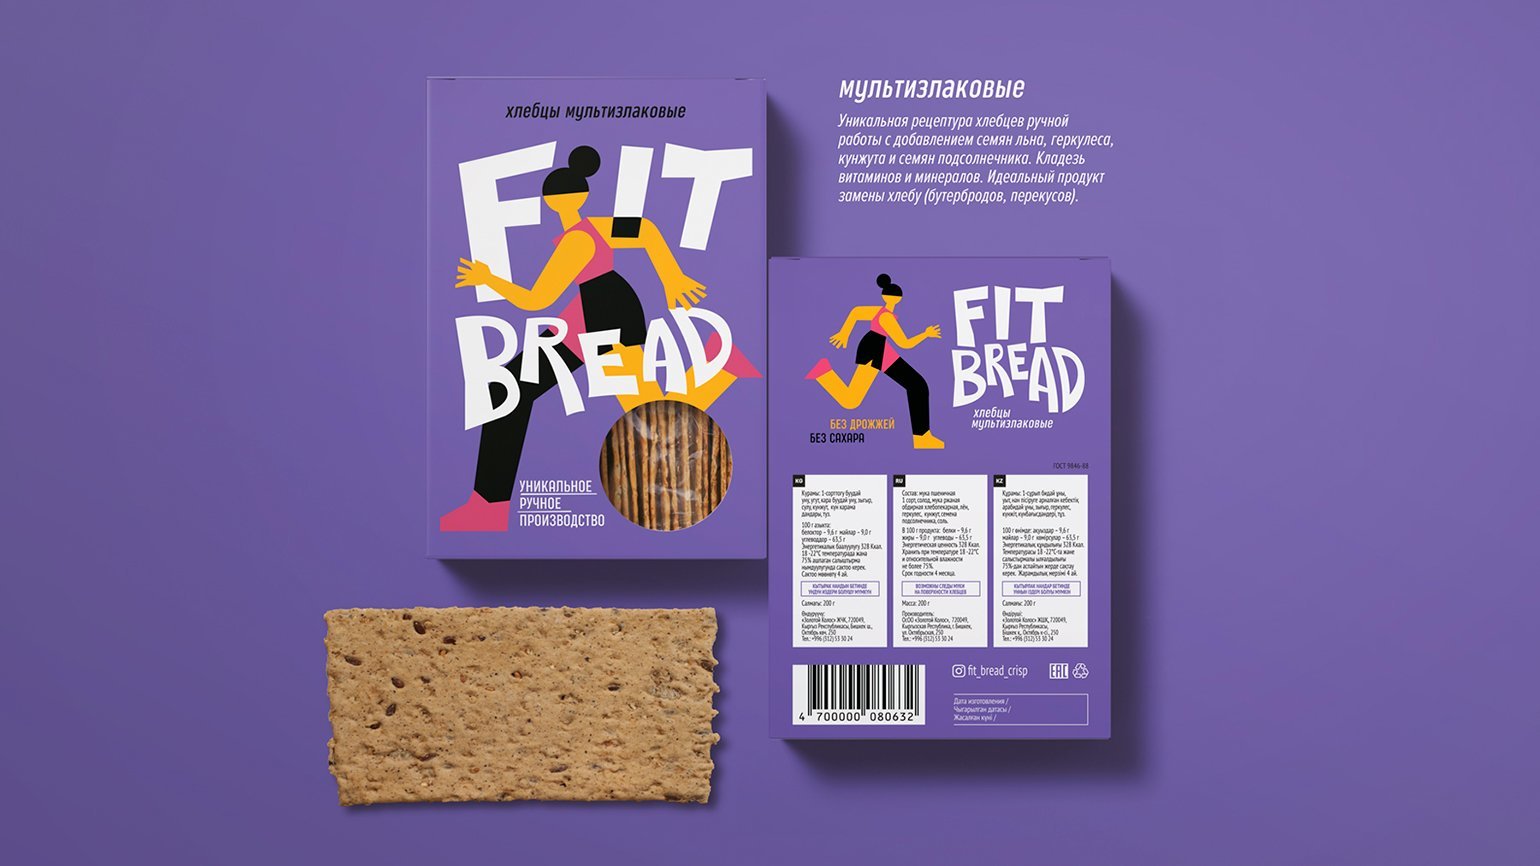 Дизайн упаковки диетических хлебцев. На коробке изображена футболистка